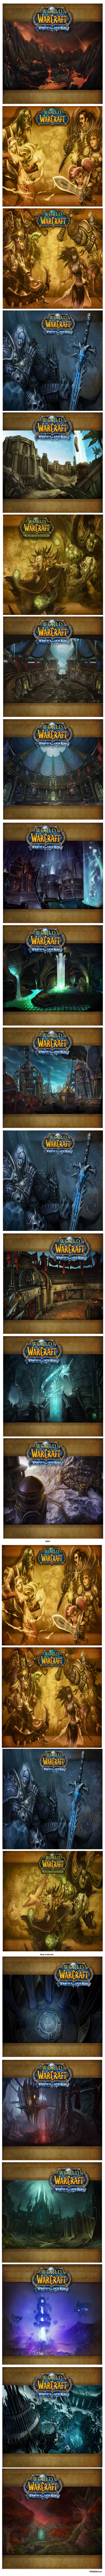 World of Warcraft - Loading Screens (Part 2)